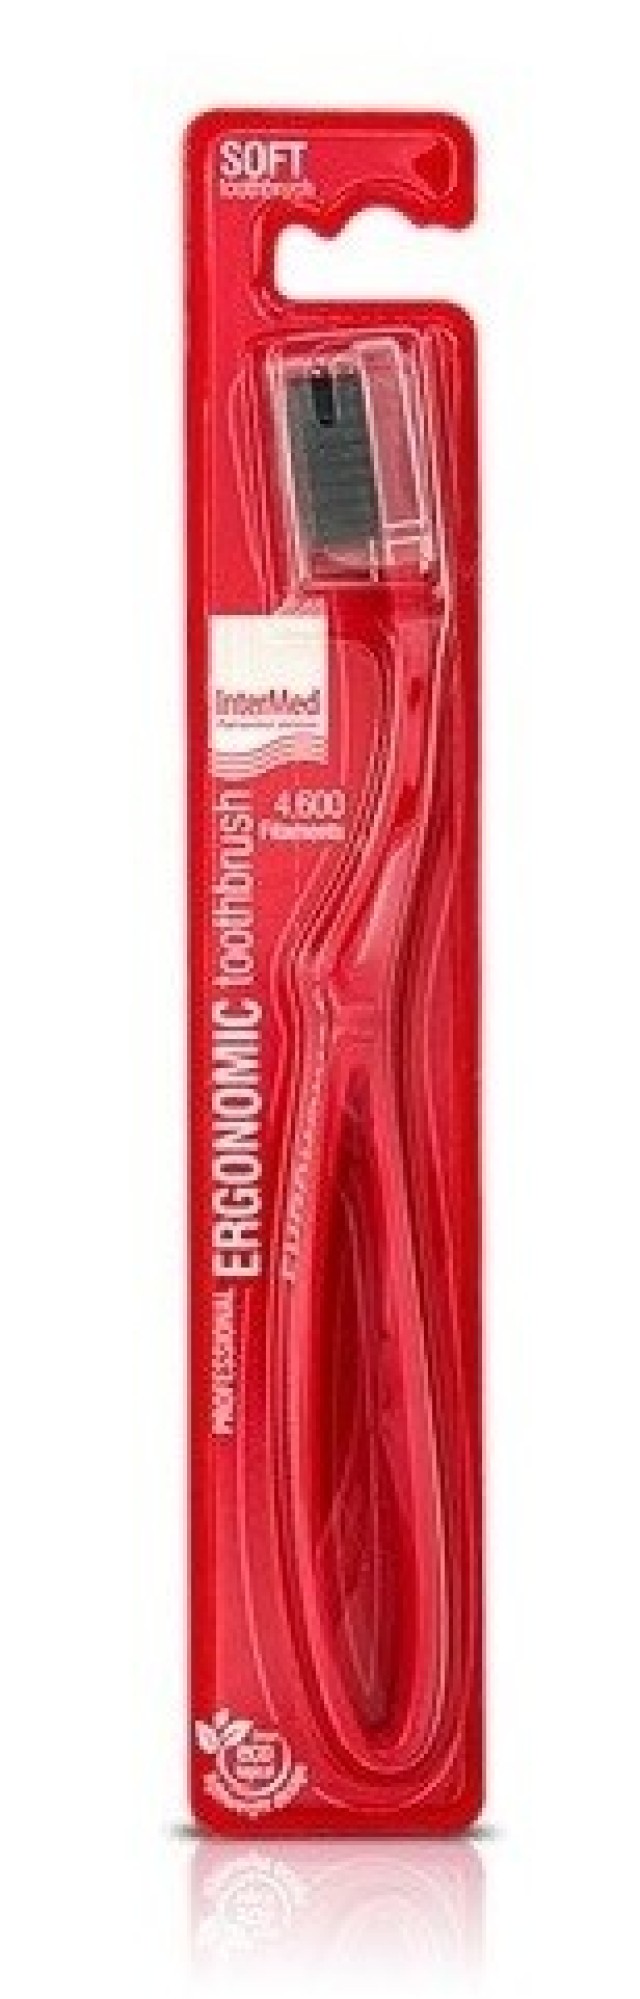 Intermed Professional Ergonomic Toothbrush Soft Οδοντόβουρτσα Κόκκινη 4.600 Ίνες